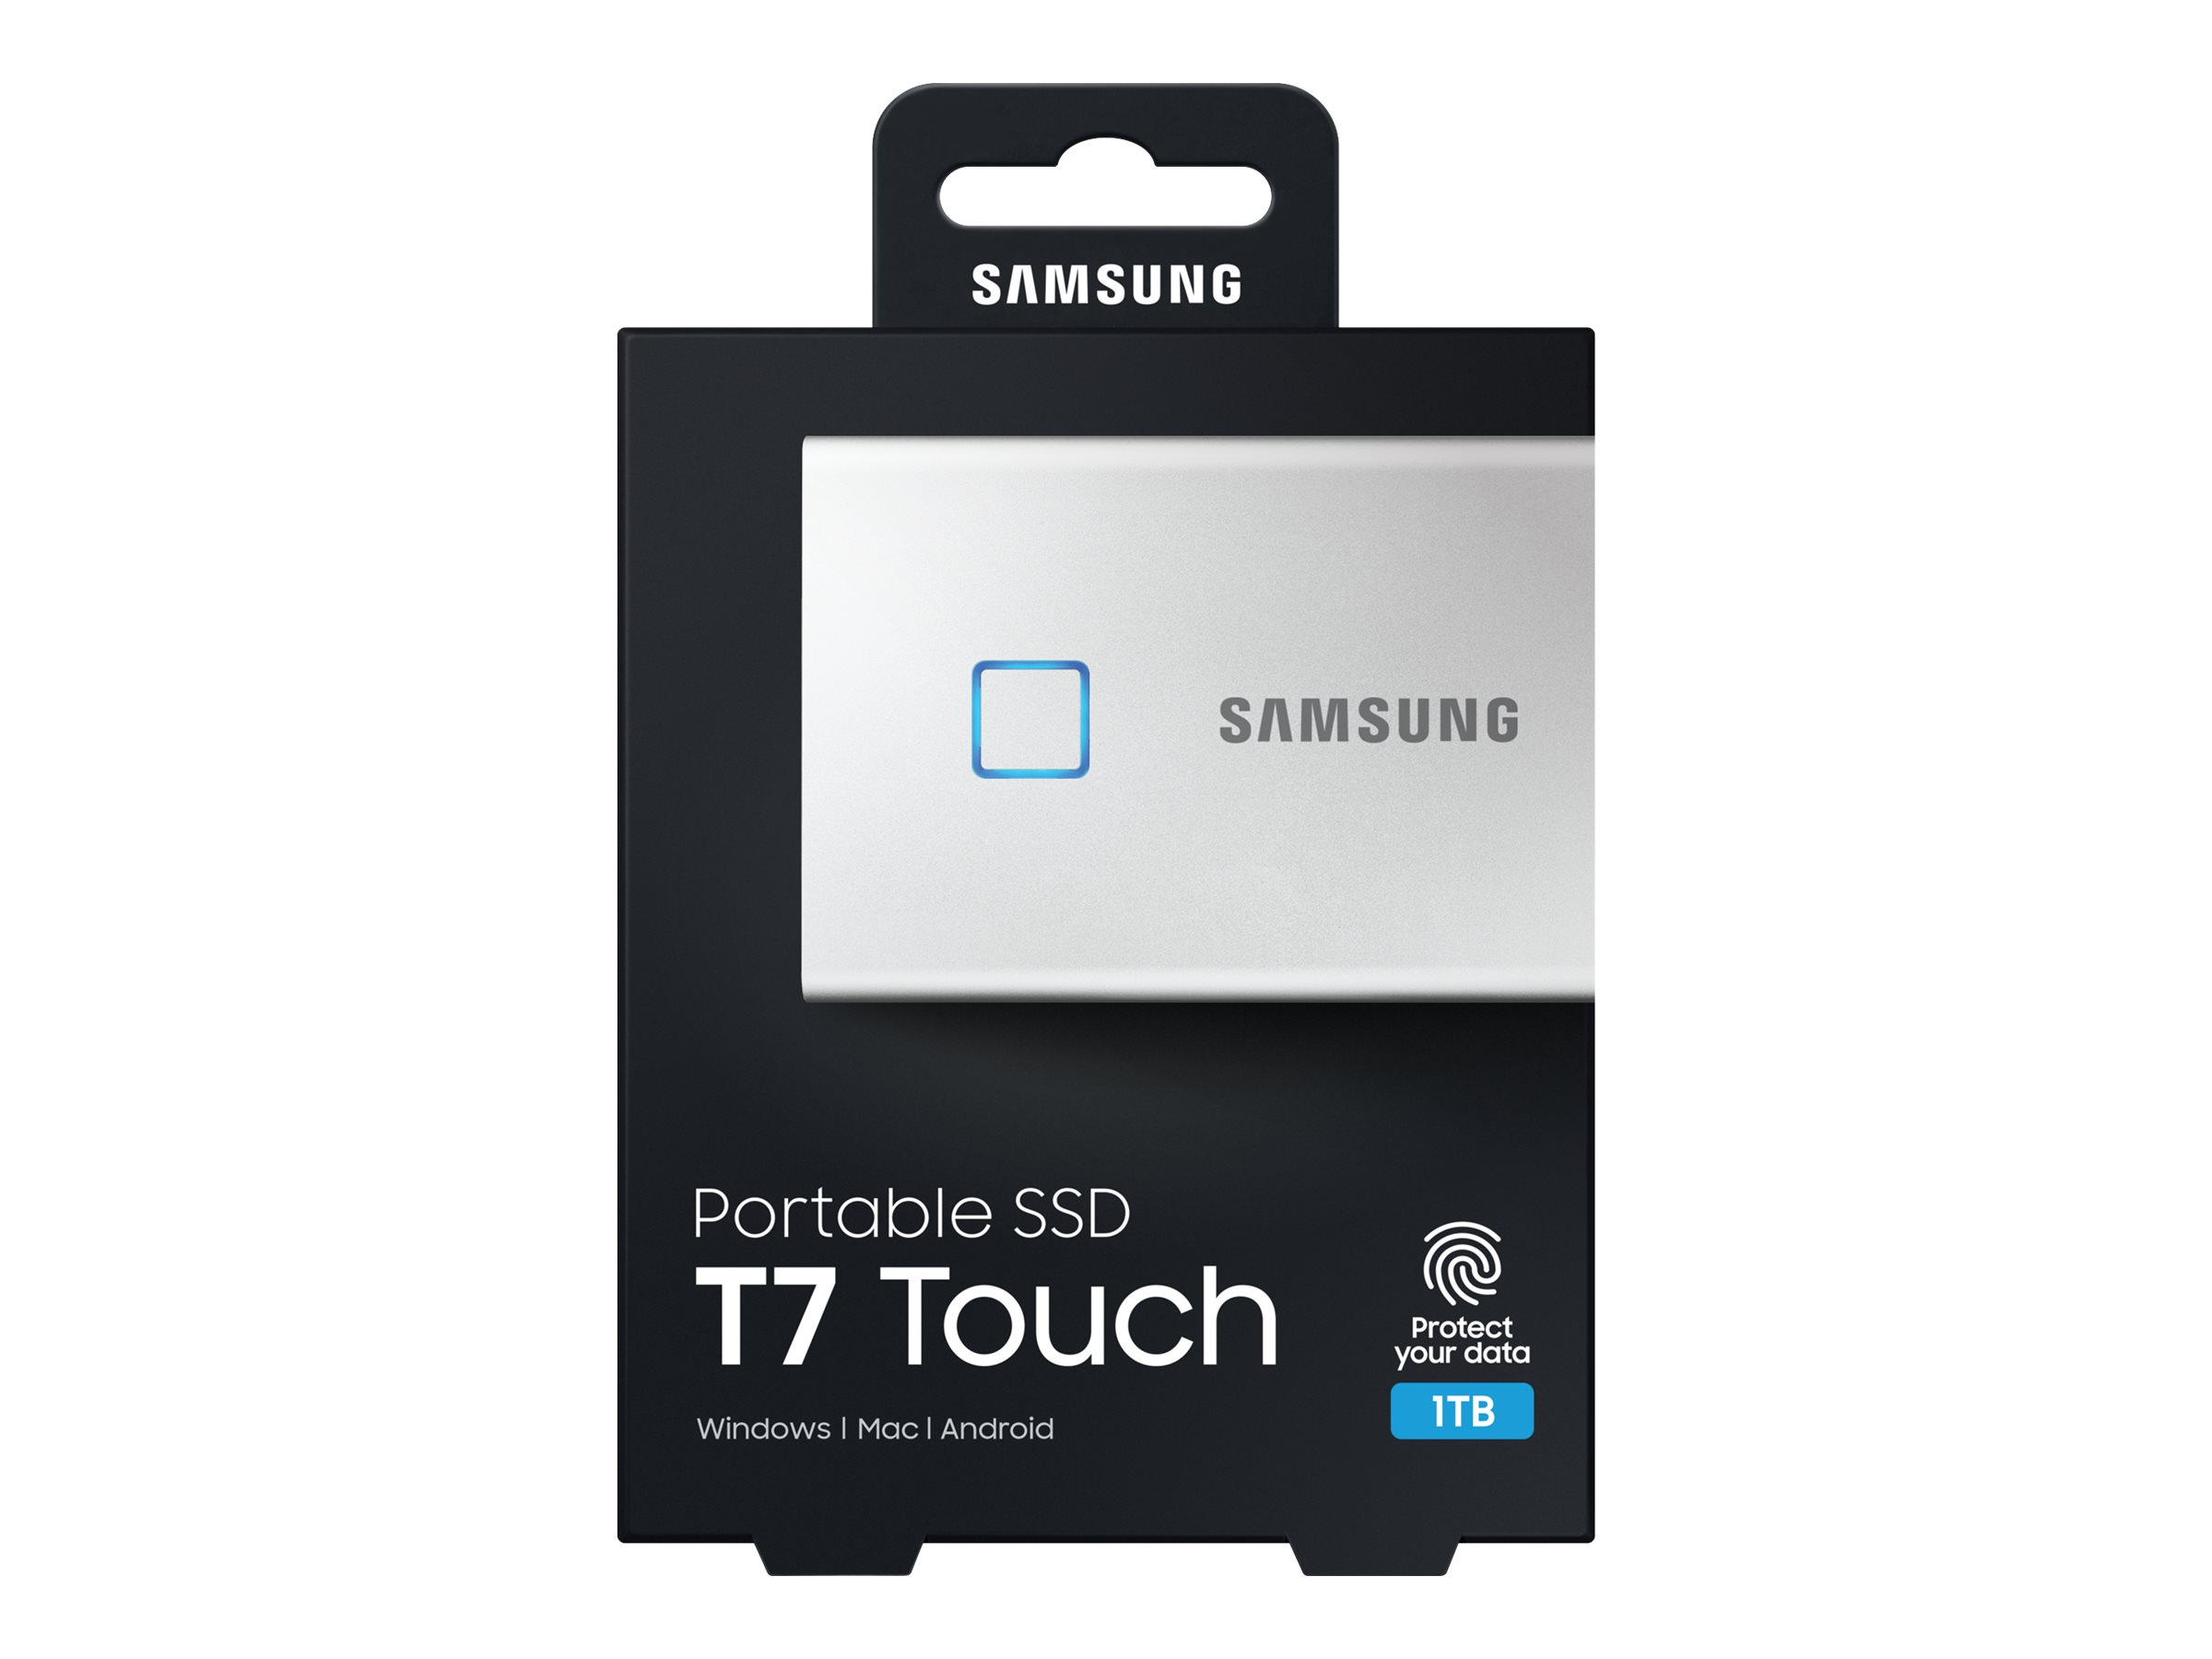  Portable SSD T7 Touch 1TB SILVER, Fingerprint unlock  